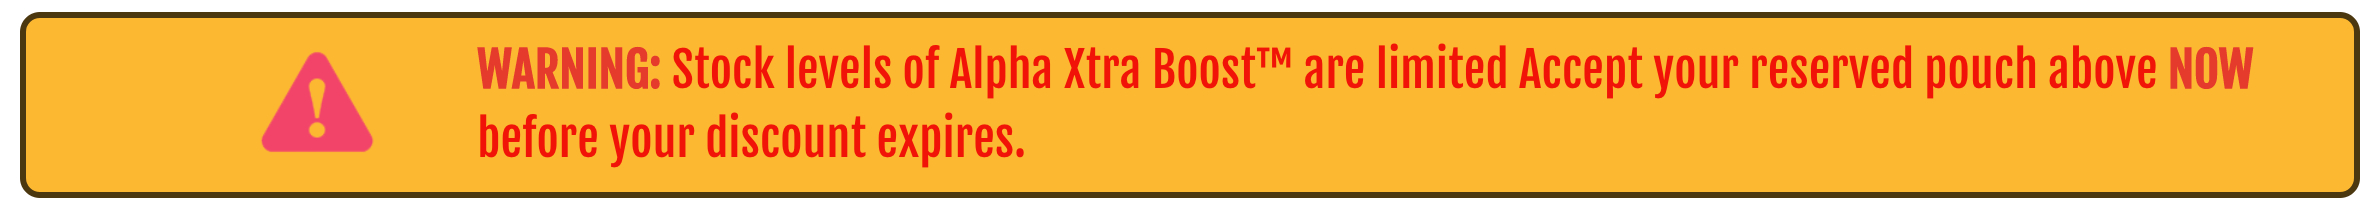 Alpha Xtra Boost - WARNING